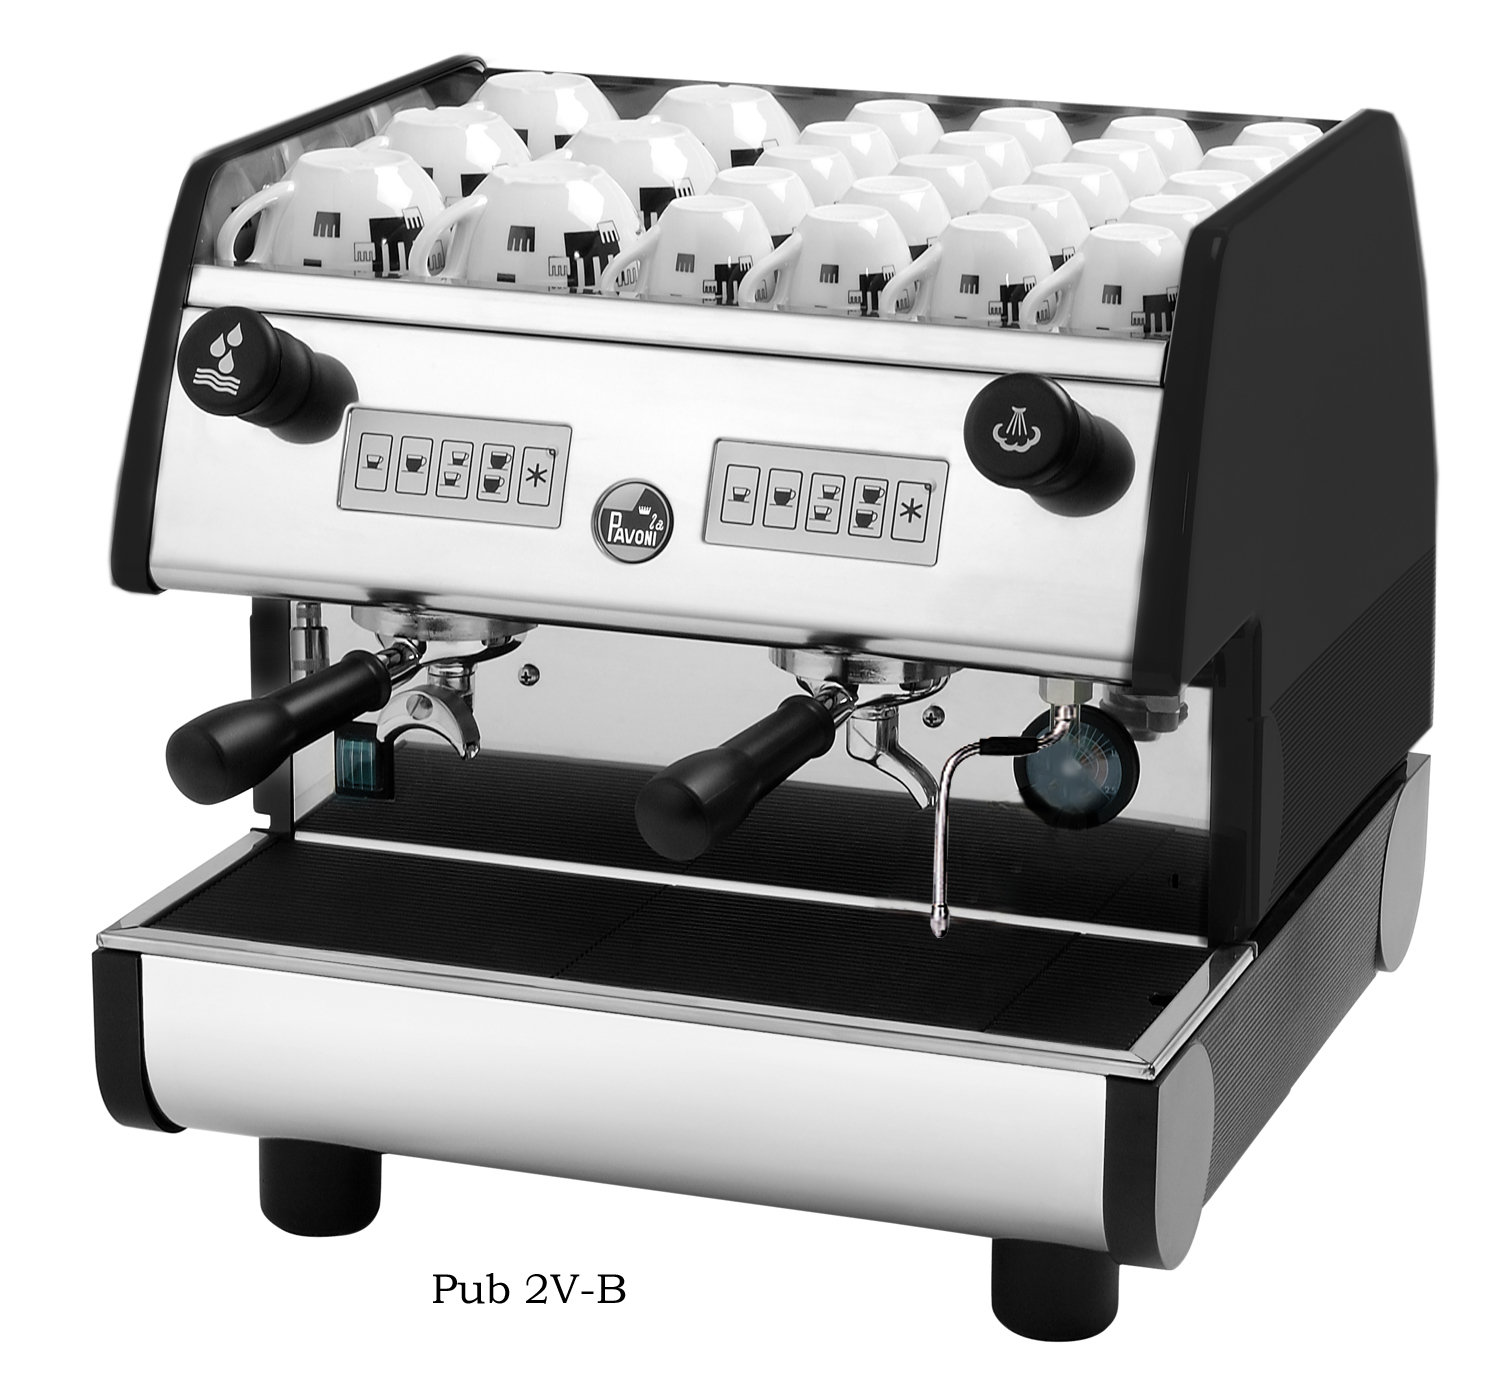 Cloer 5928 Electric Espresso Maker - Crema